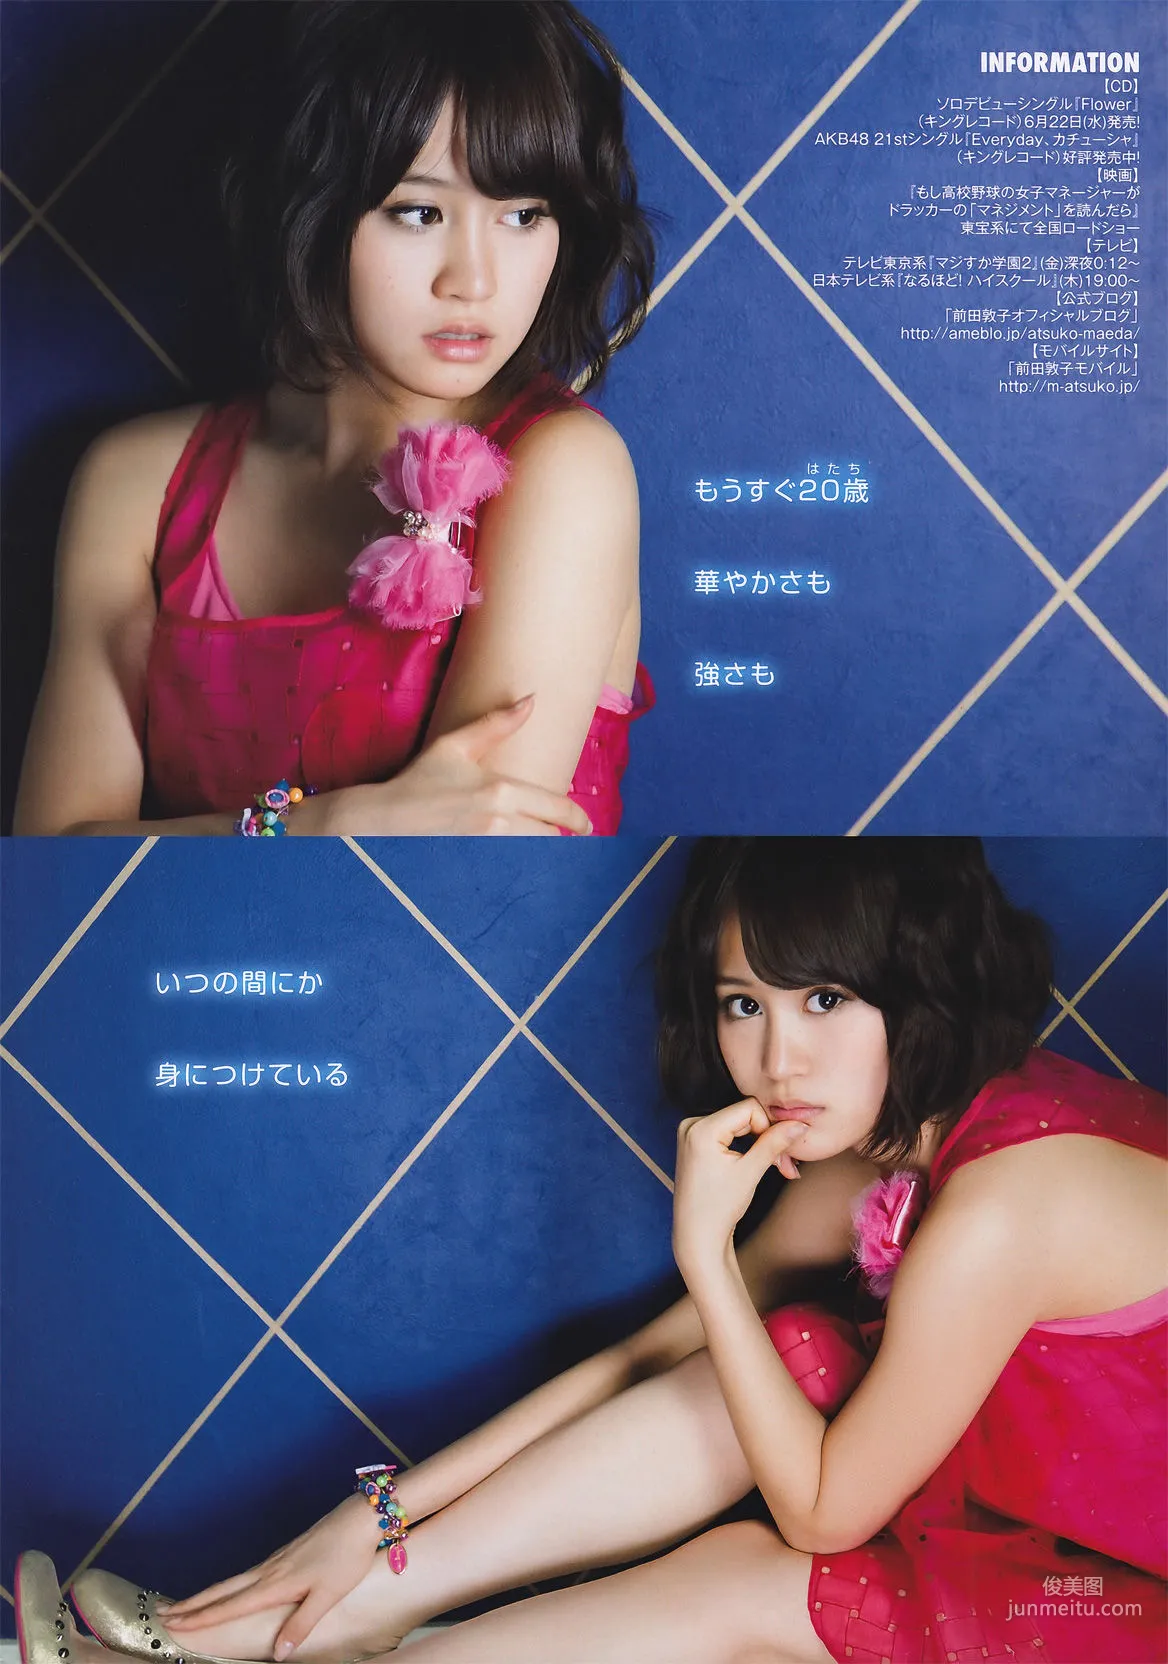 [Young Magazine] 前田敦子 Atsuko Maeda 2011年No.29 写真杂志7